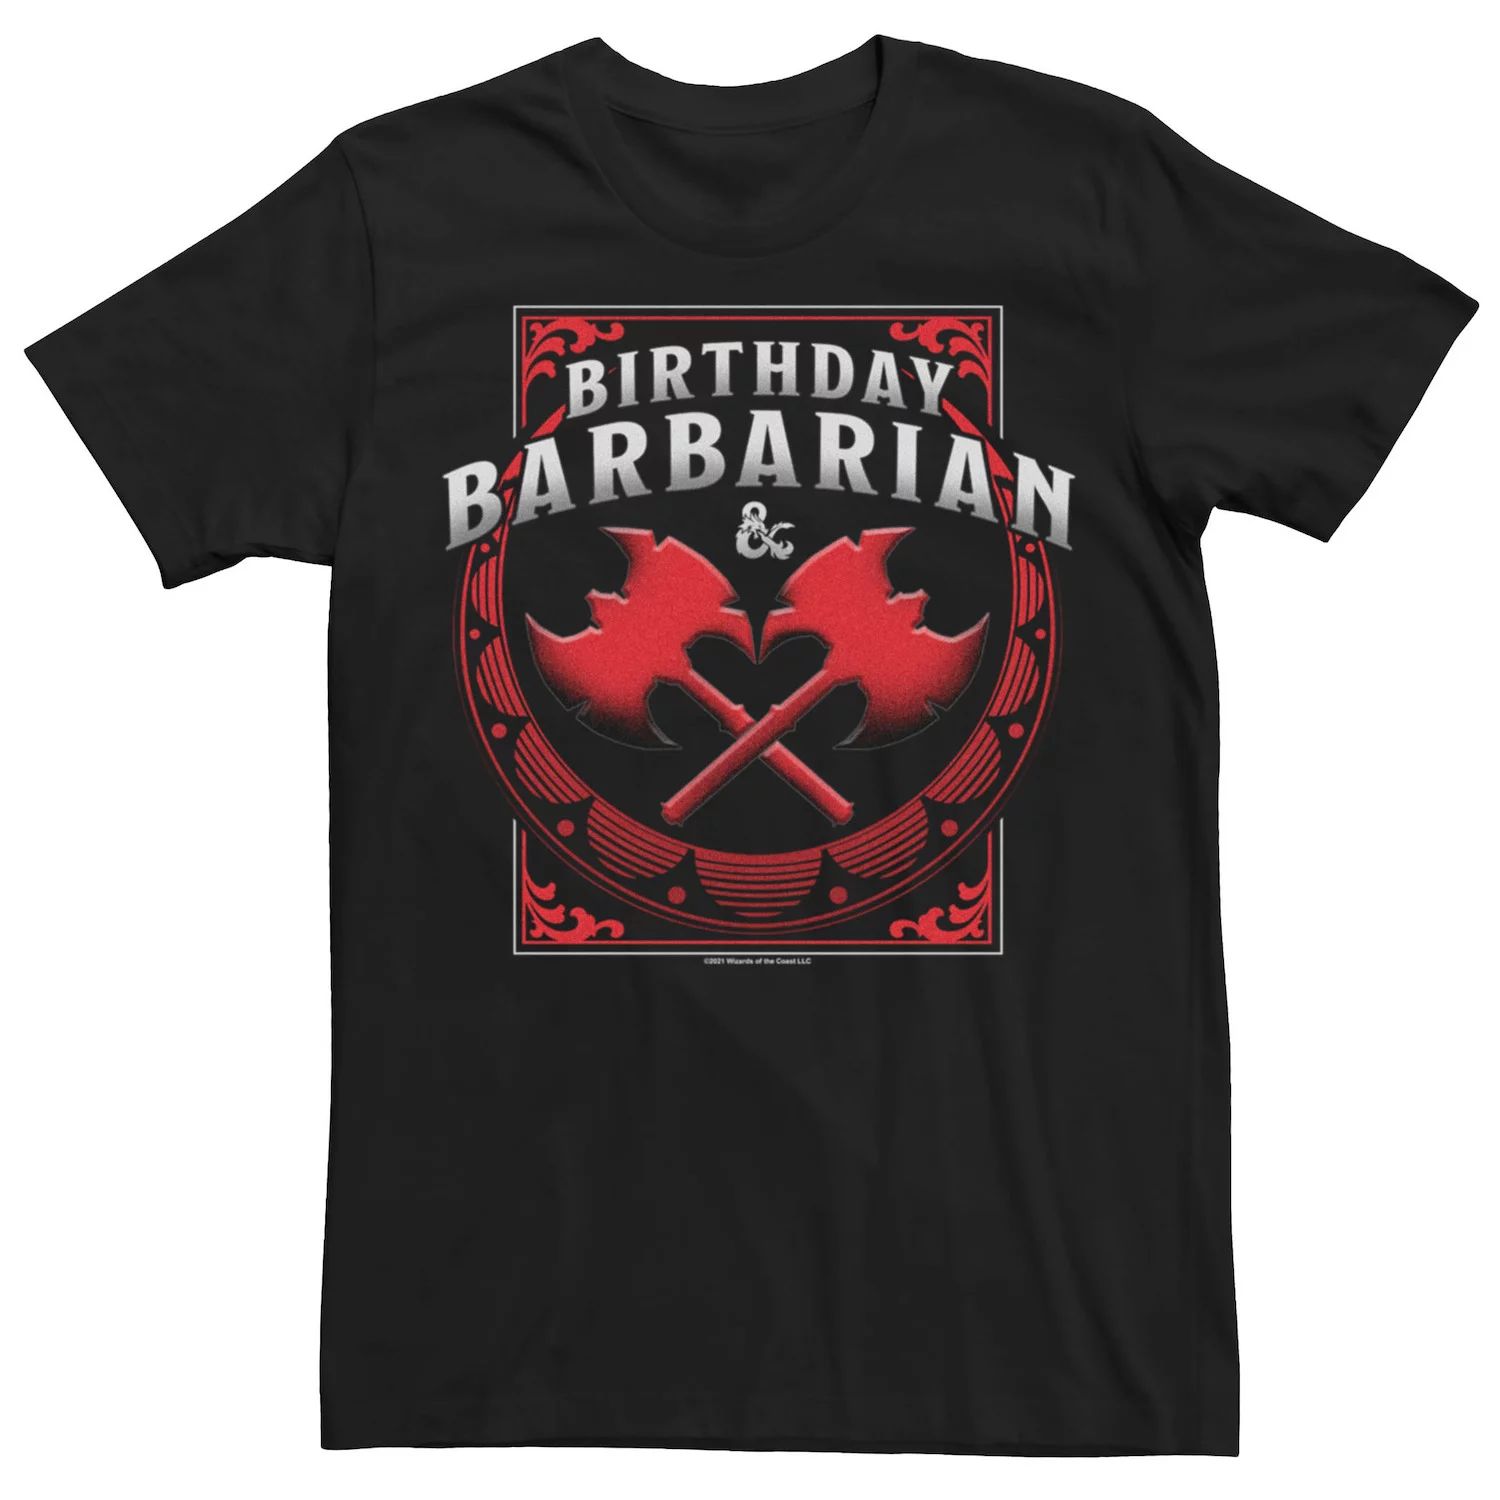 Мужская футболка с логотипом Wizards Of The Coast Dungeons & Dragons на день рождения Barbarian Axes Licensed Character